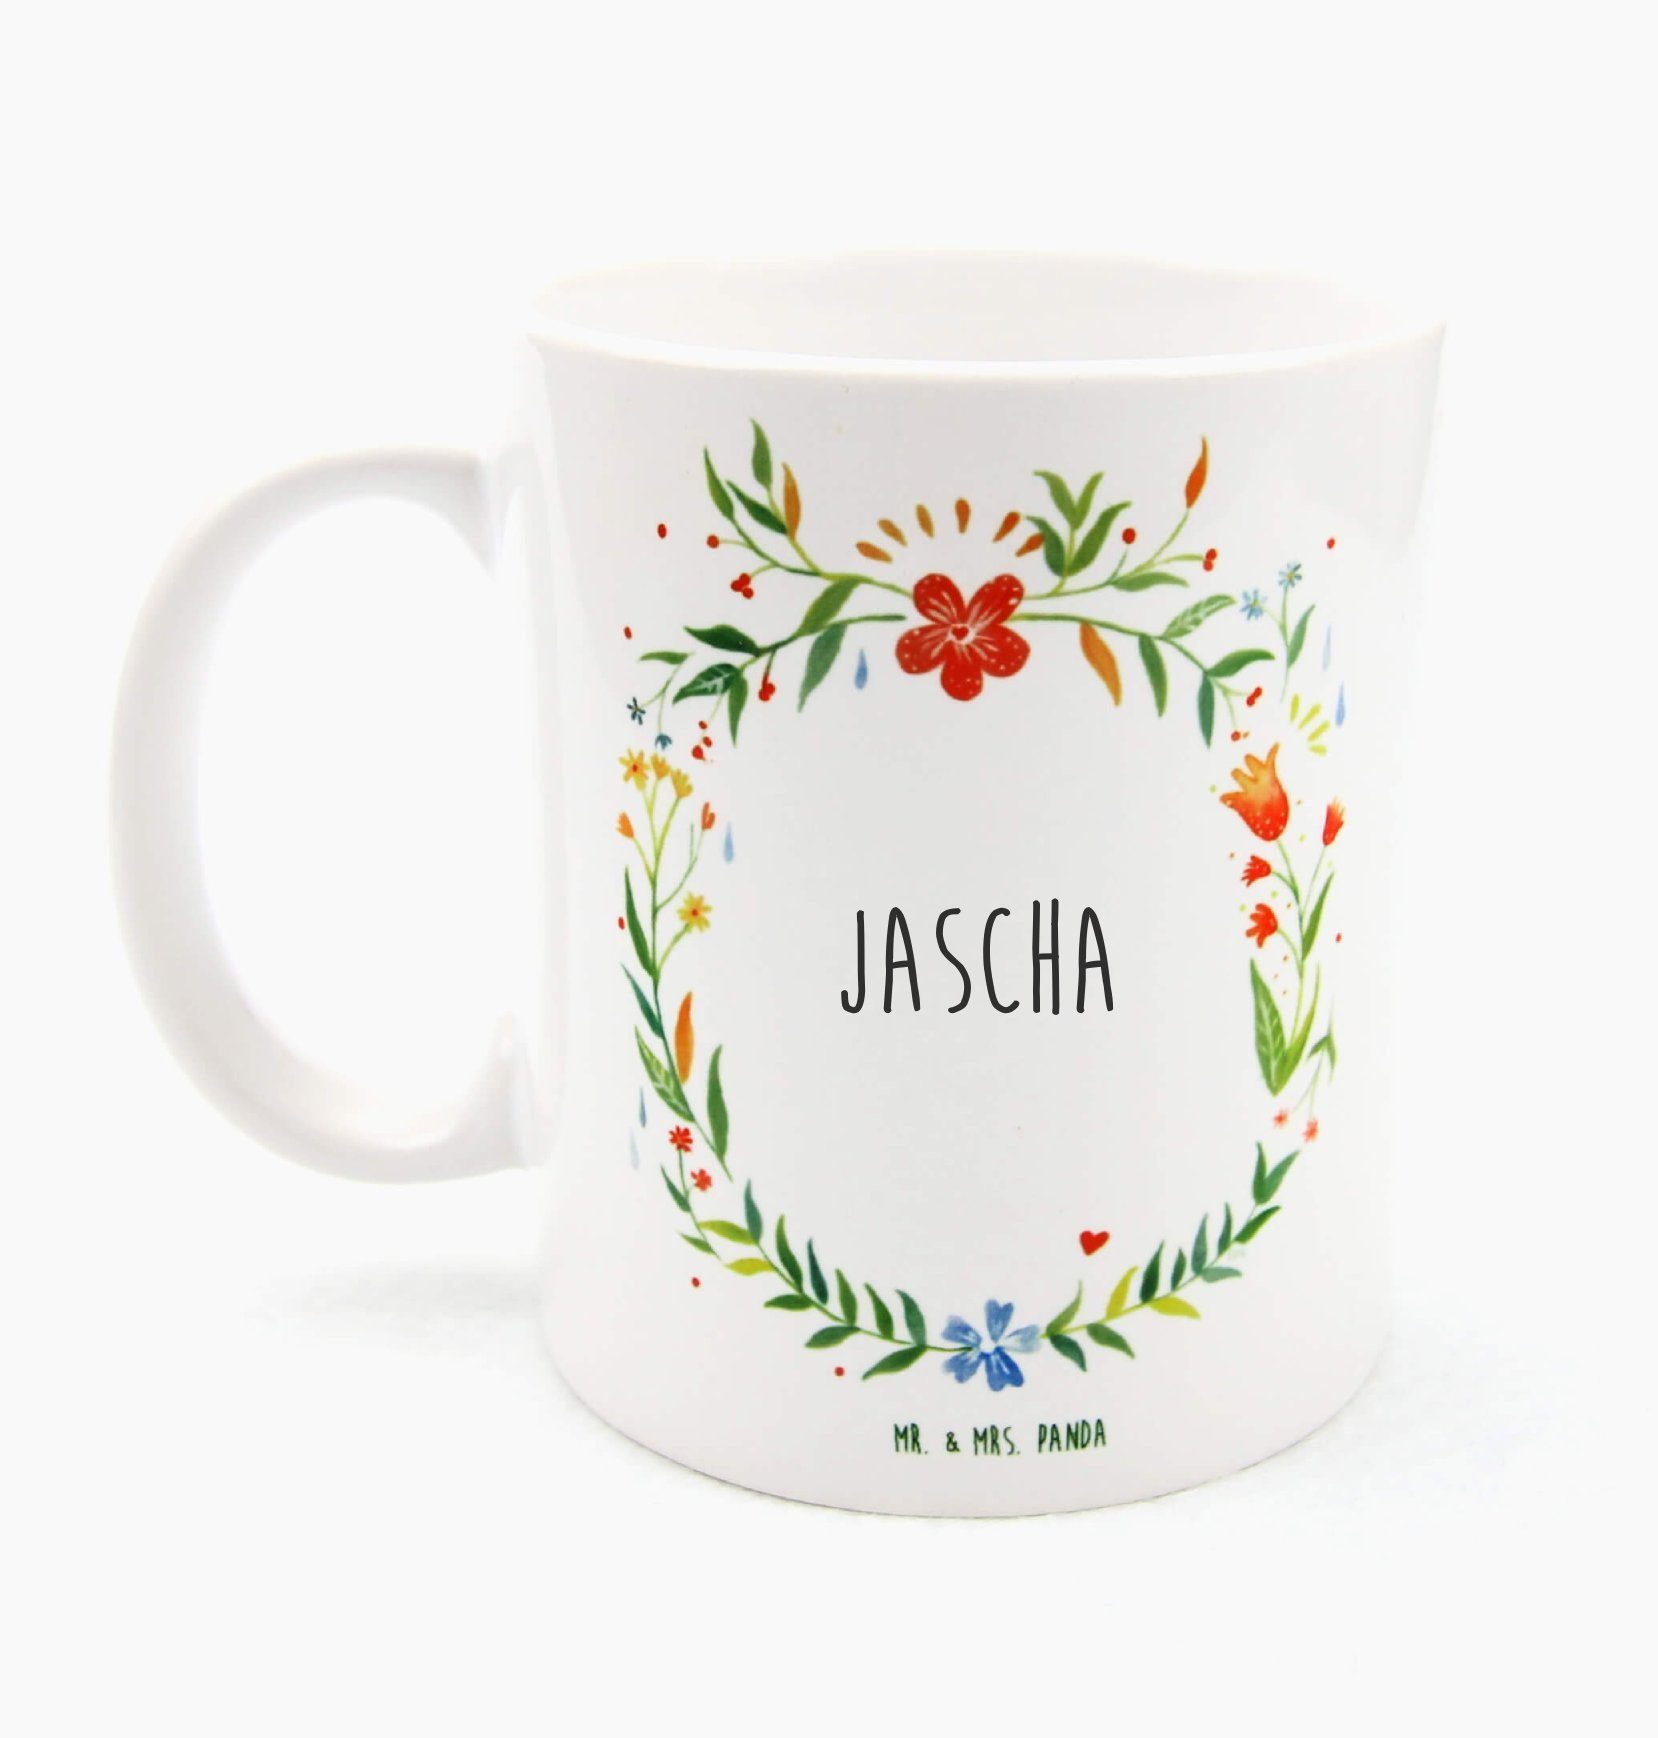 Mr. & Mrs. Panda Geschenk Tasse, - Tasse Keramik Jascha Büro Tasse, Tasse Geschenk, Sp, Kaffeebecher